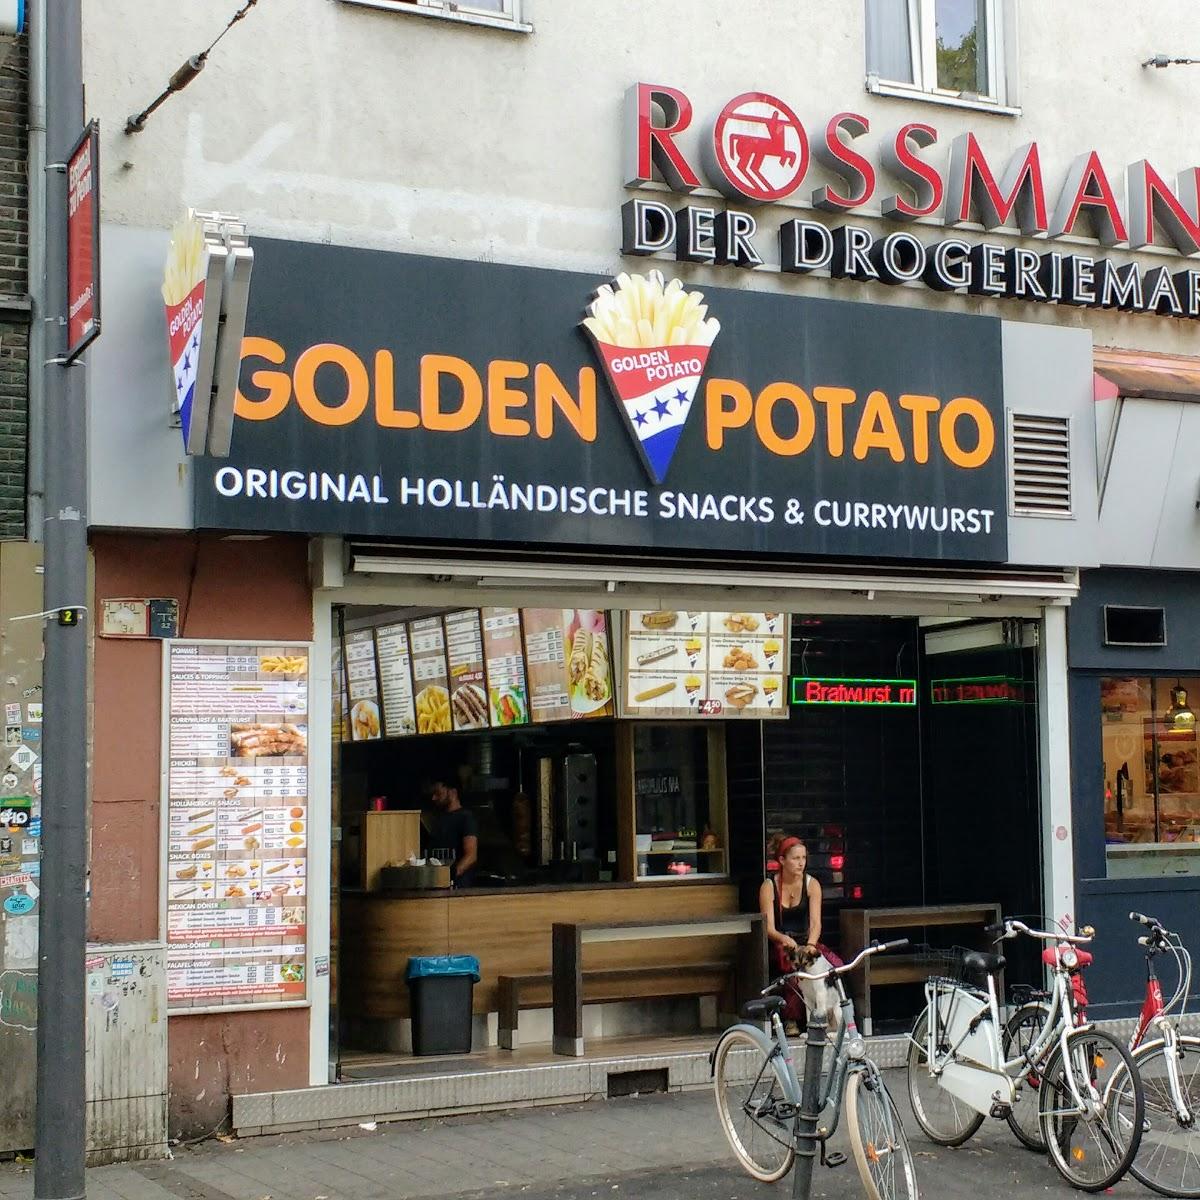 Restaurant "Golden Potato" in Köln